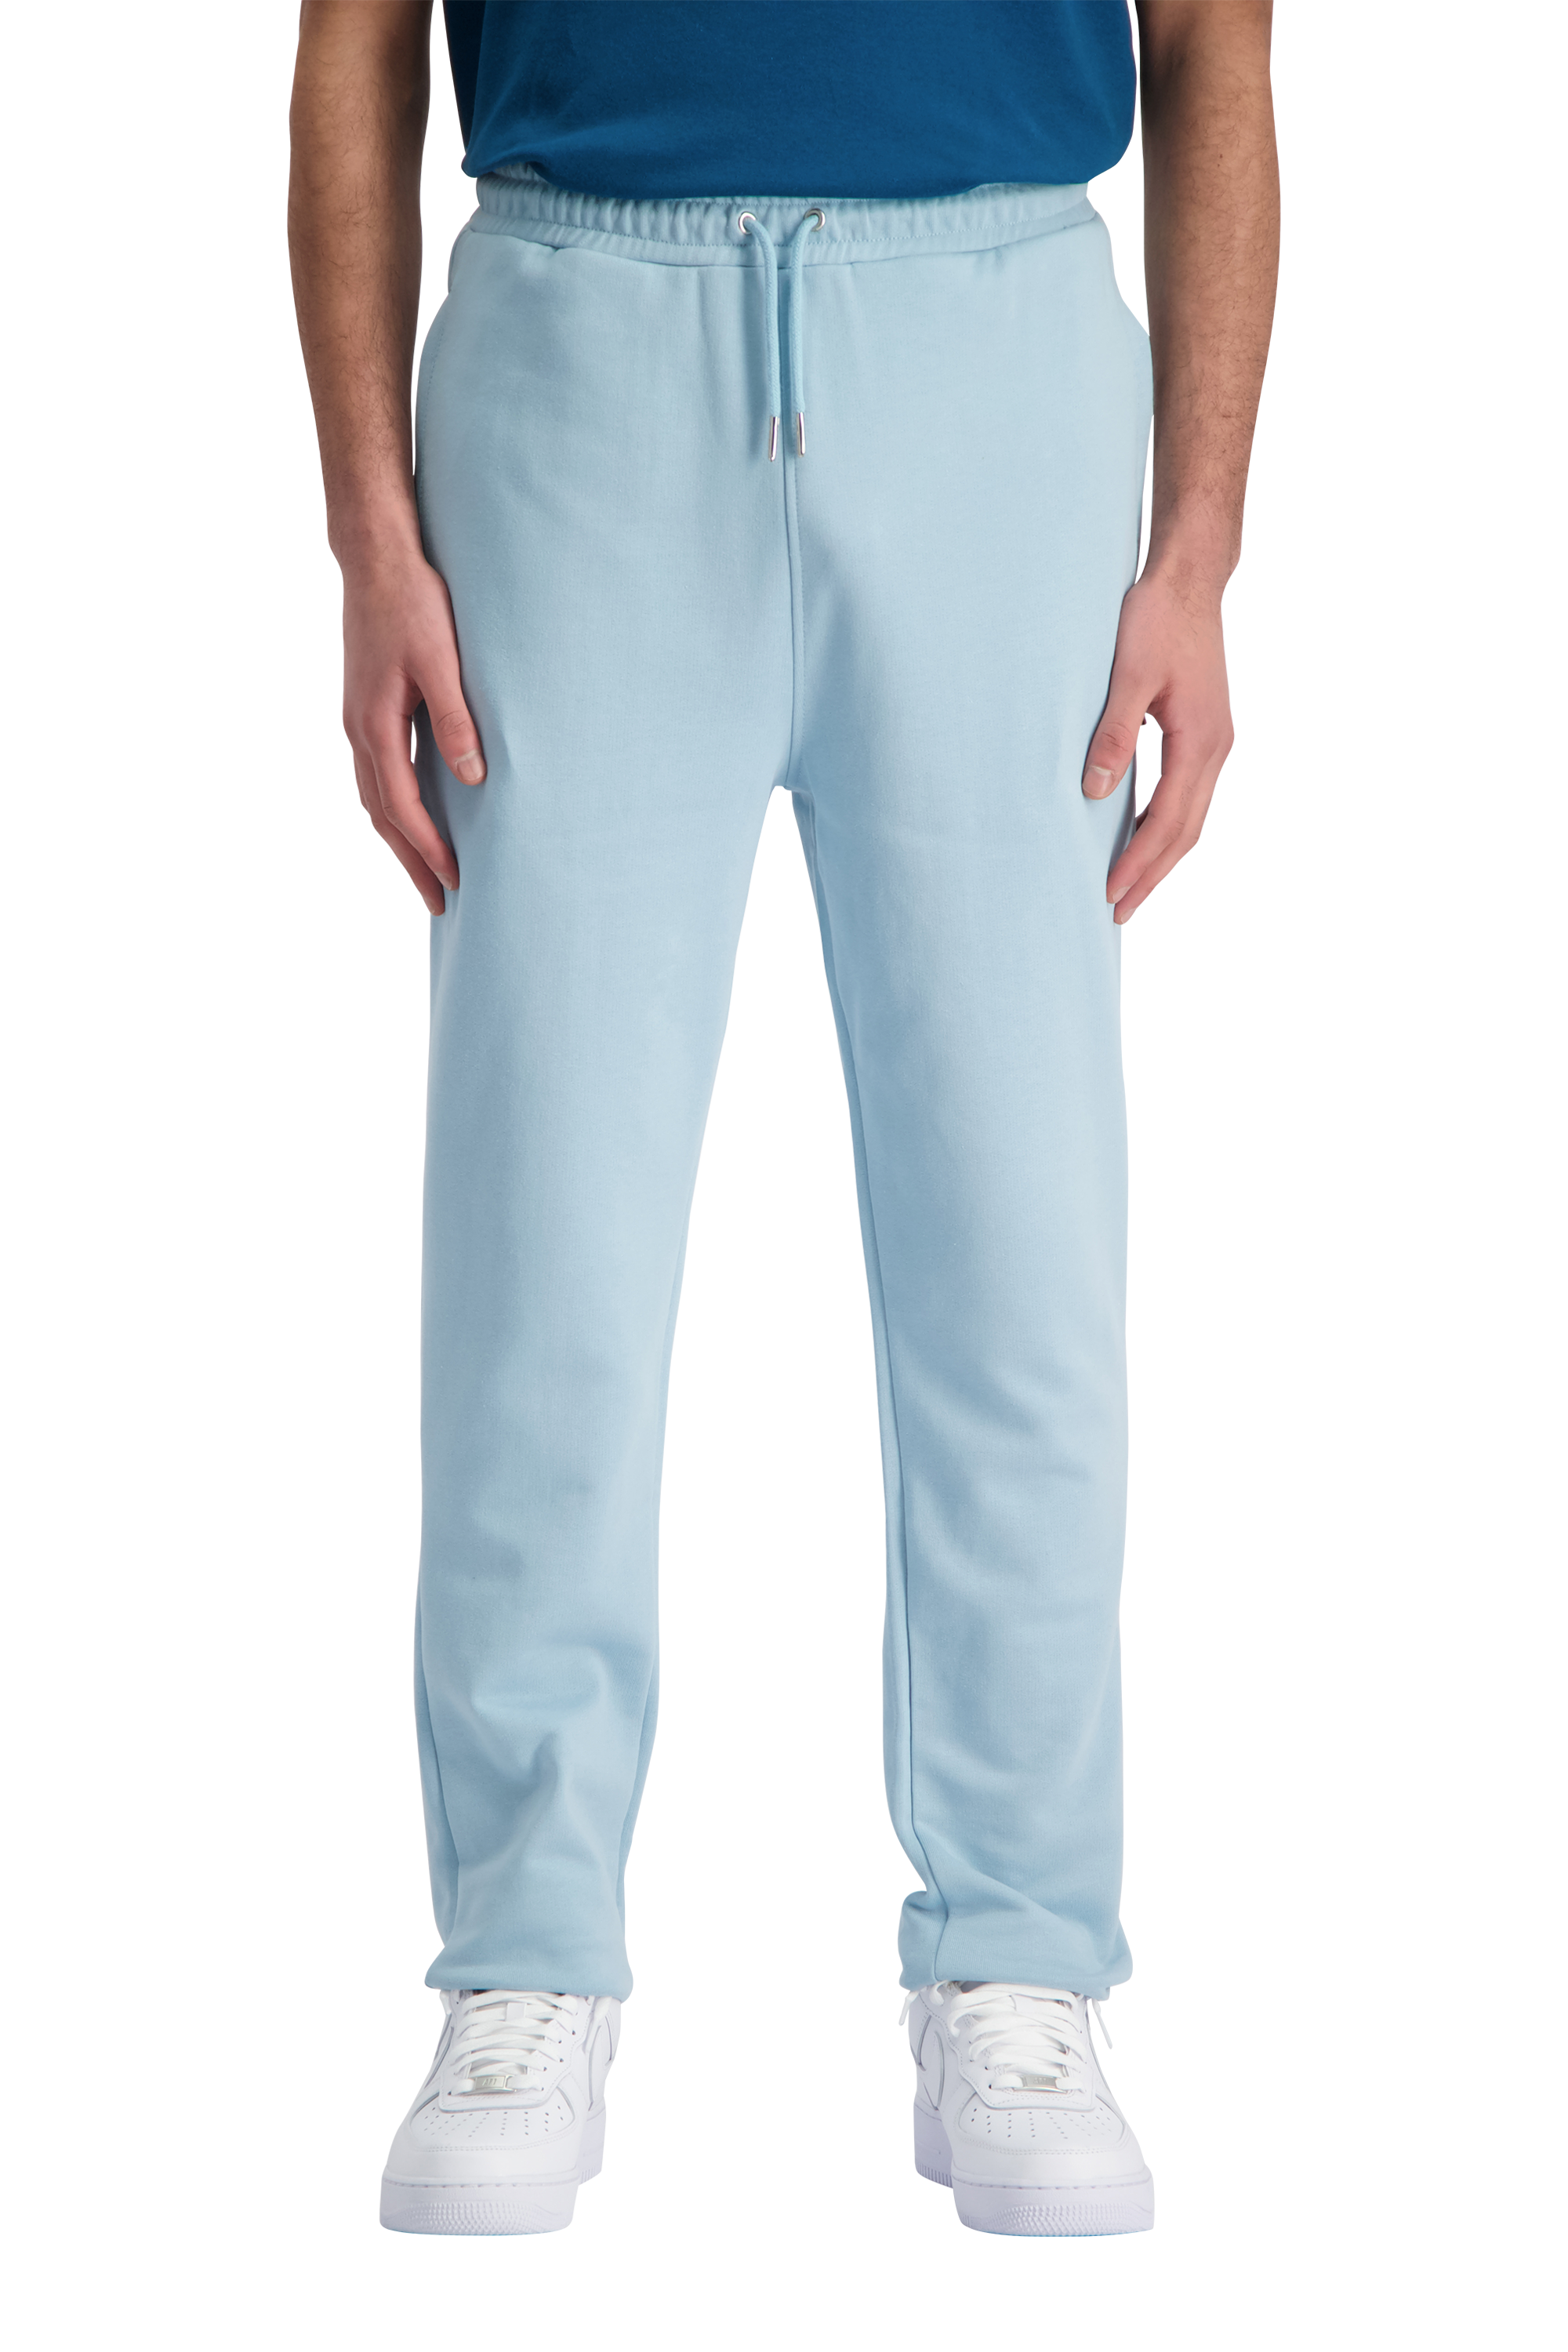 Testudo Trousers 2.0 Light Blue